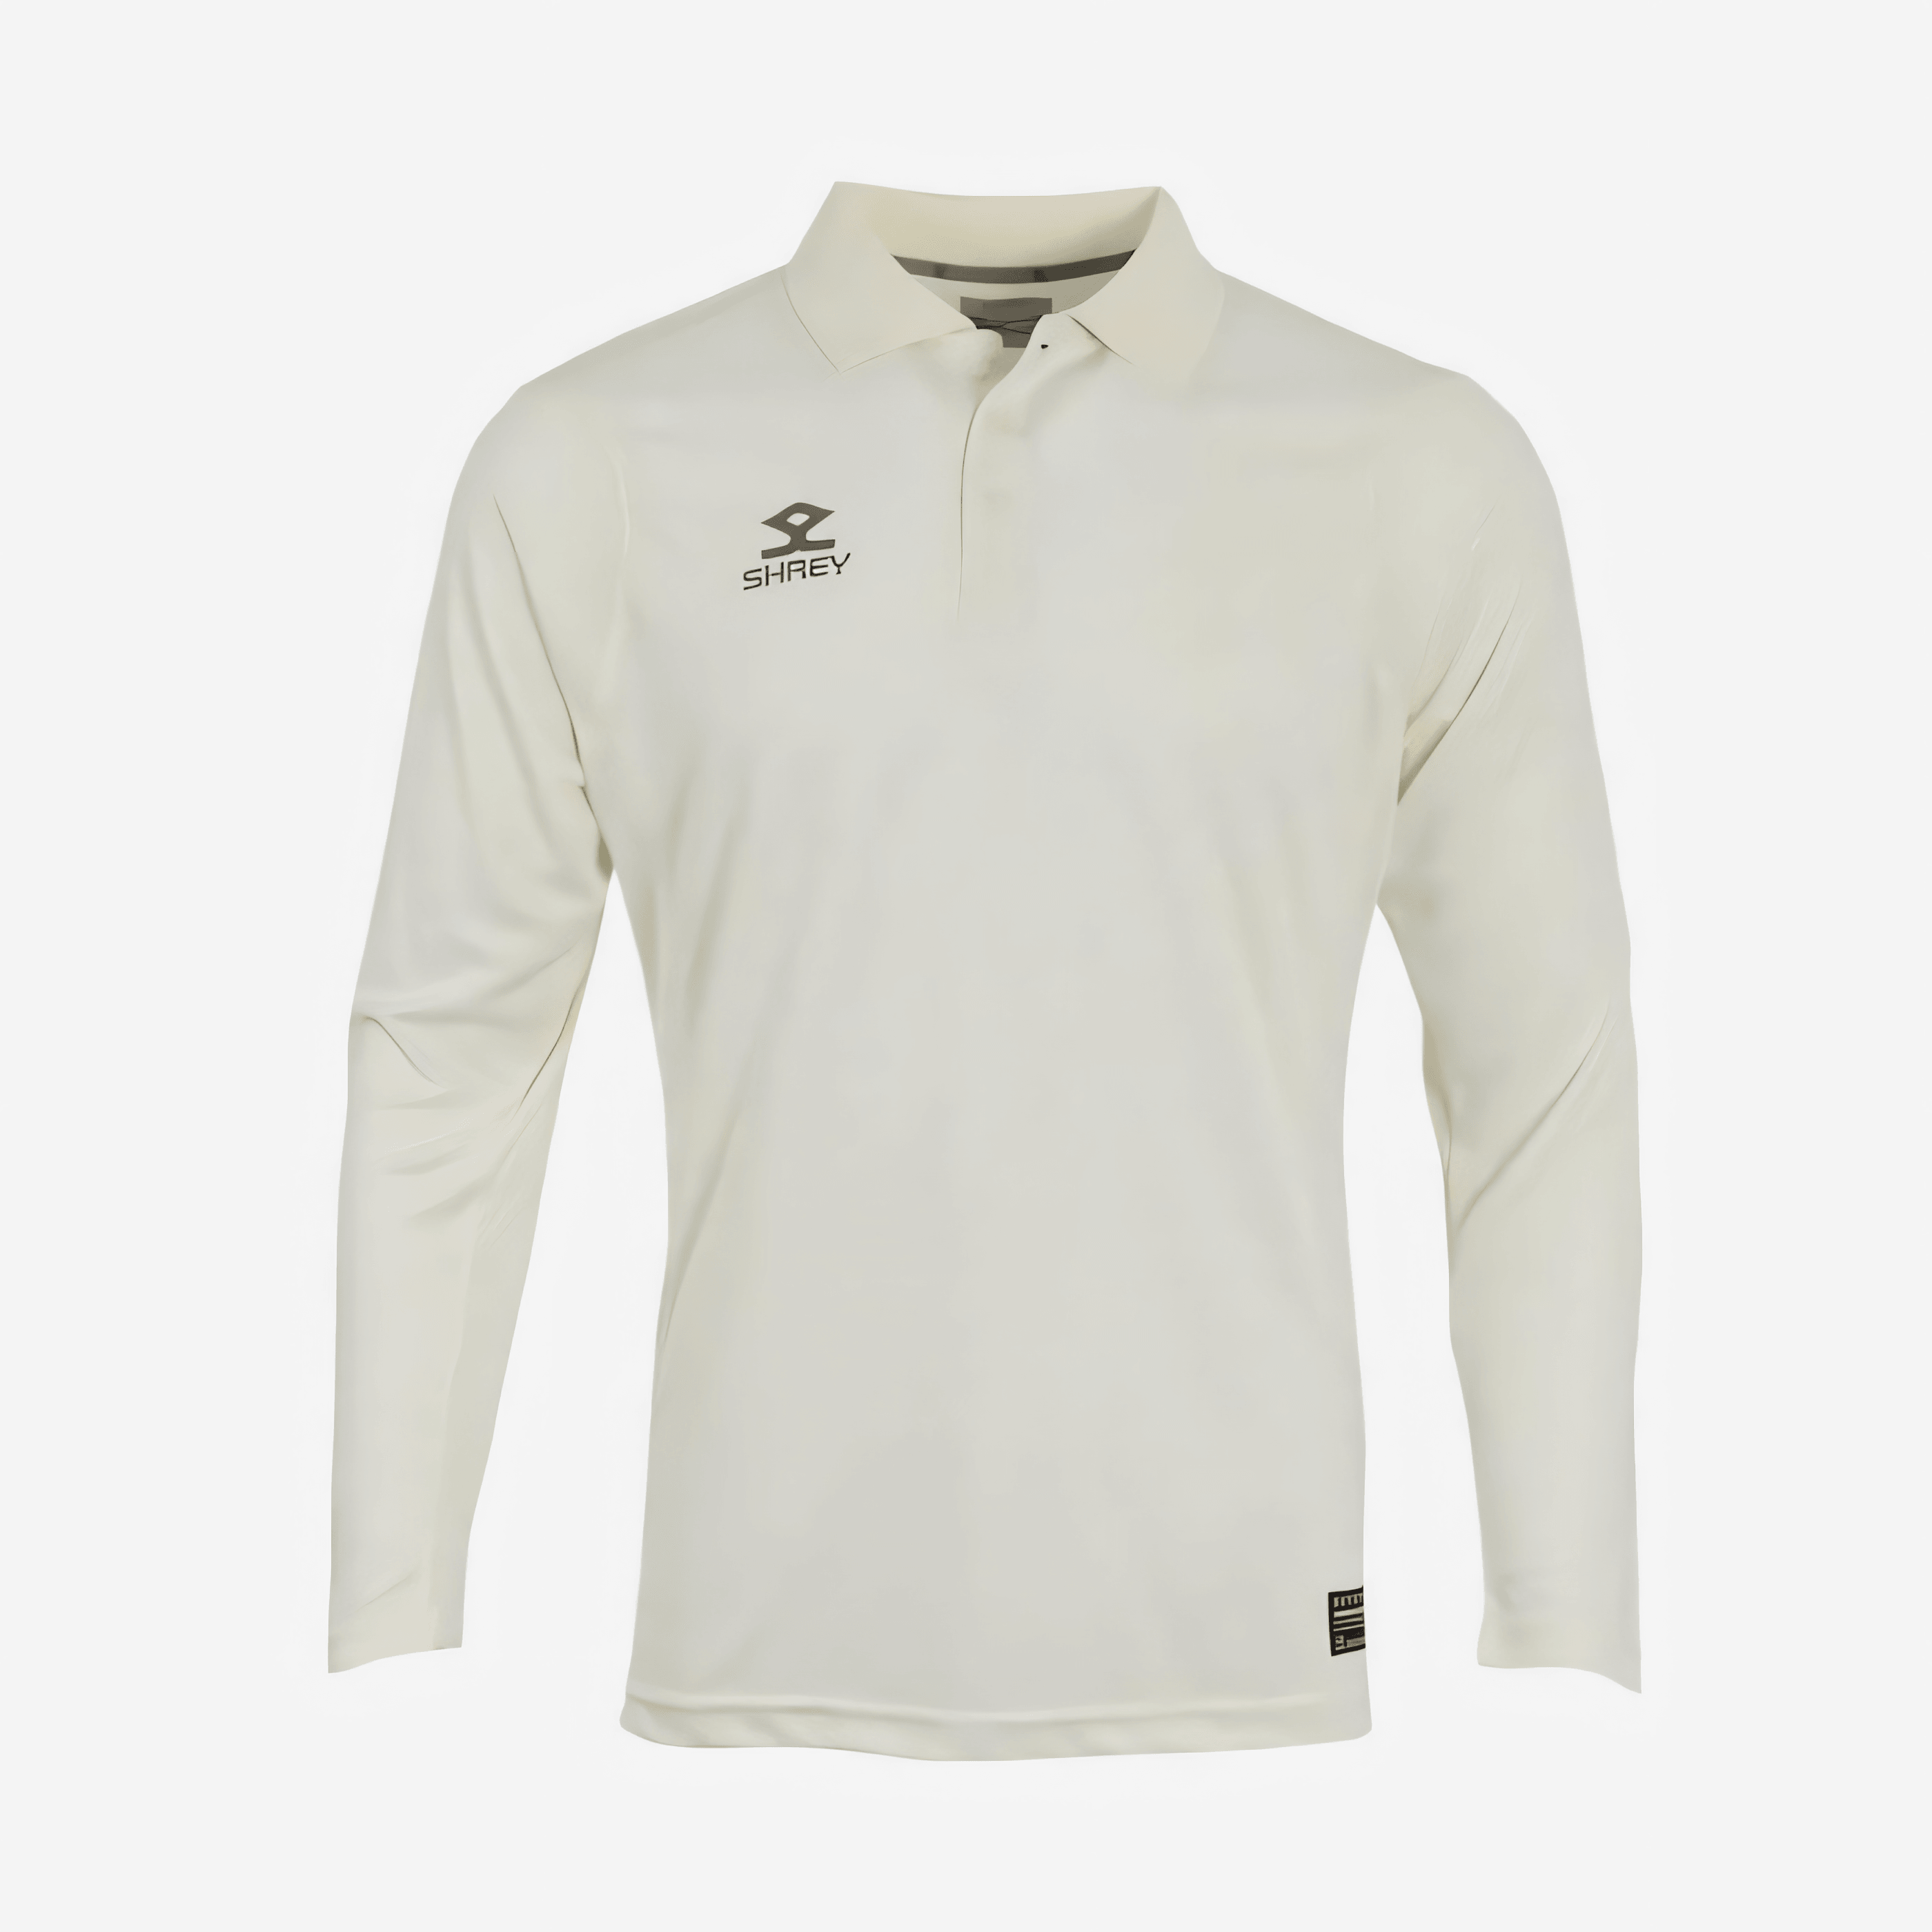 Shrey Match Cricket Shirt White Long Sleeve - AT Sports